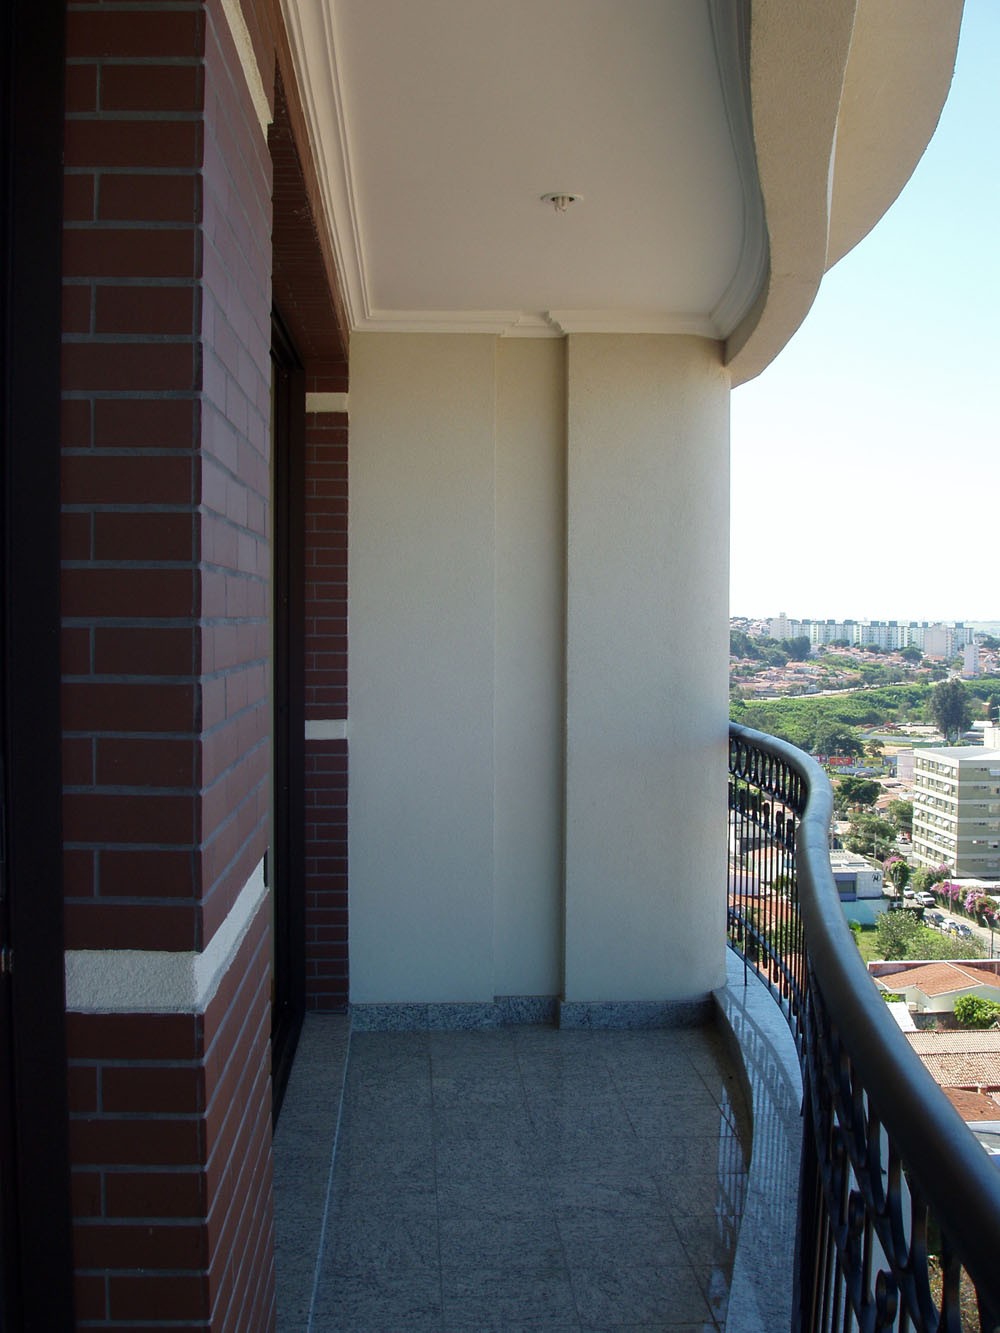 gal/holiday/Brazil 2005 - Campinas Apartment and Views/Apartment balcony_P6030003.jpg